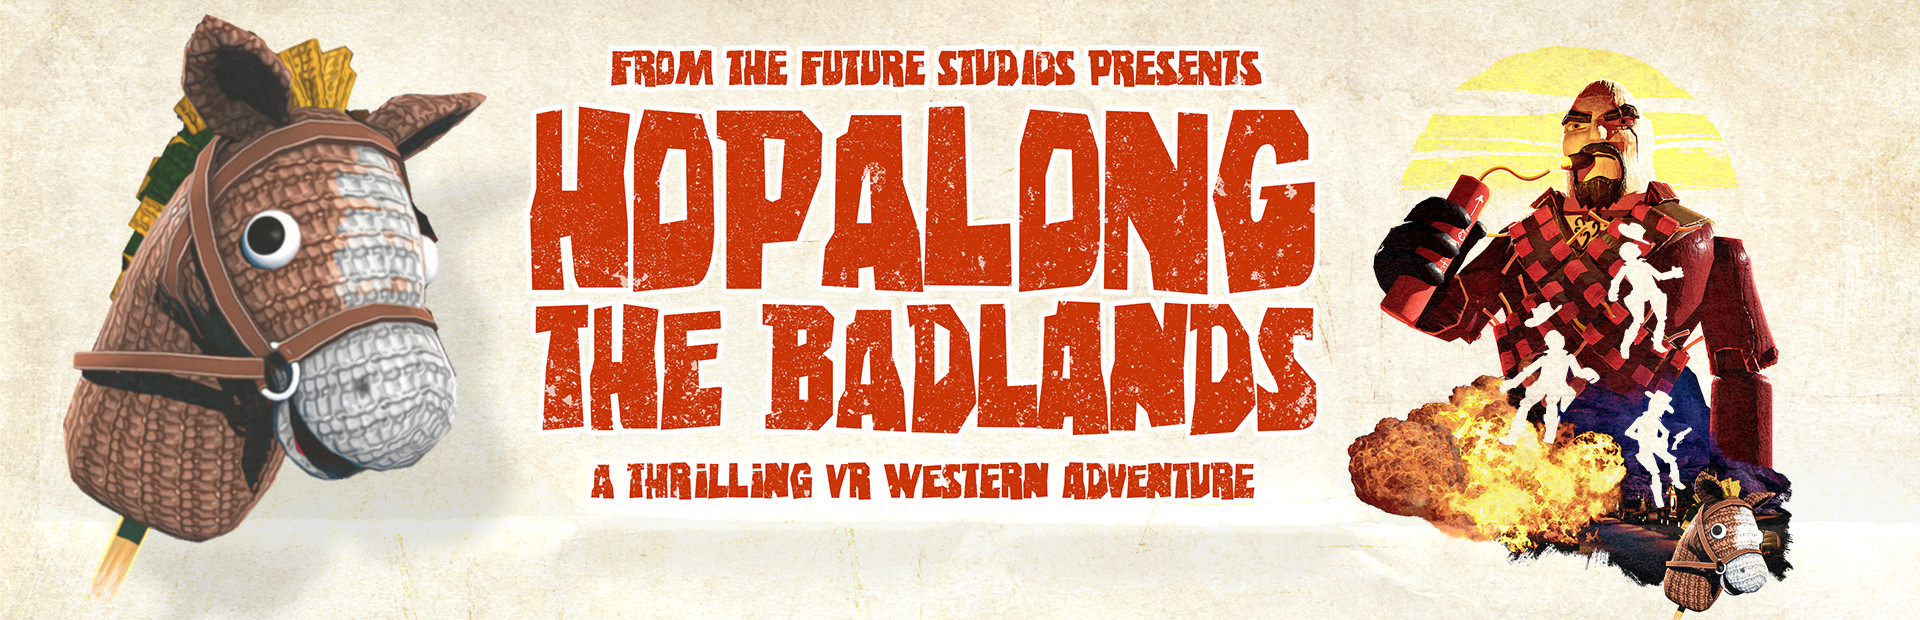 Hopalong: The Badlands cover image